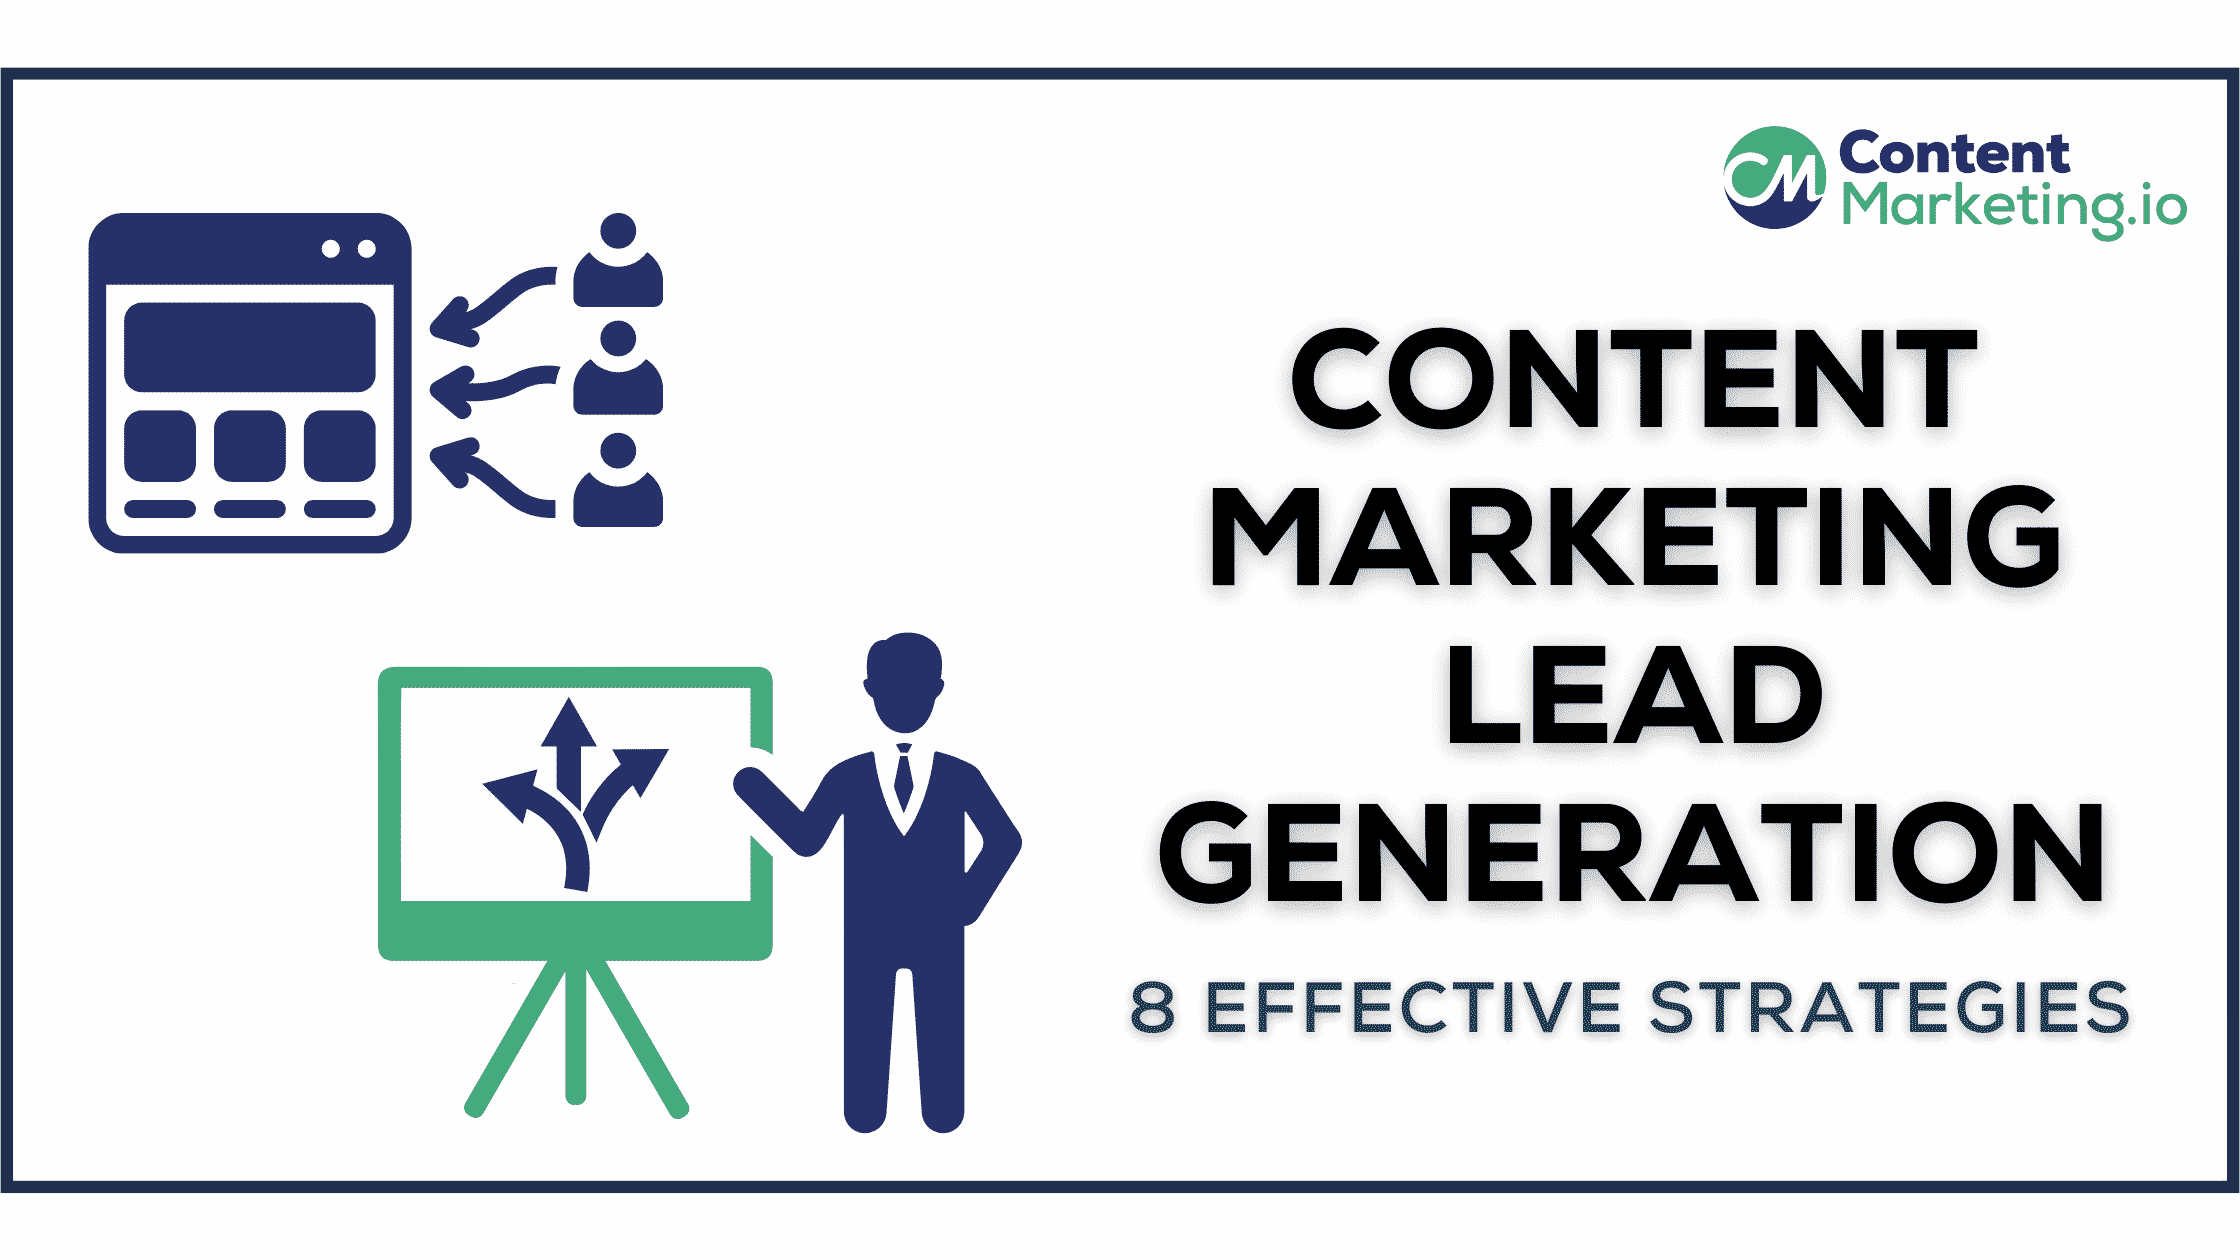 Content Marketing Lead Generation